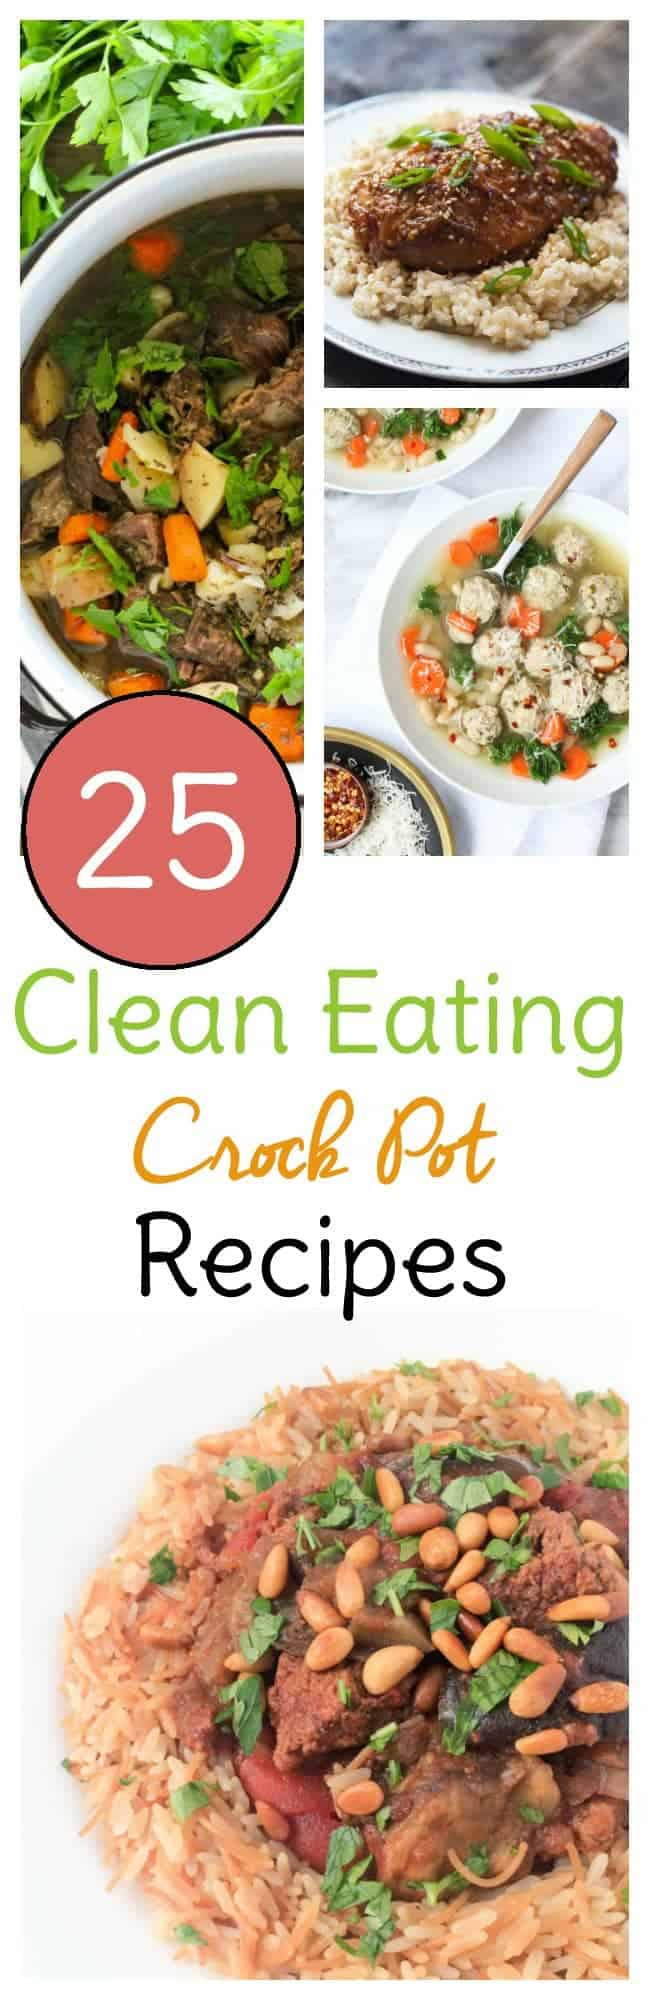 Clean Eating Crock Pot Meals
 Clean Eating Crock Pot Recipes Sweet T Makes Three